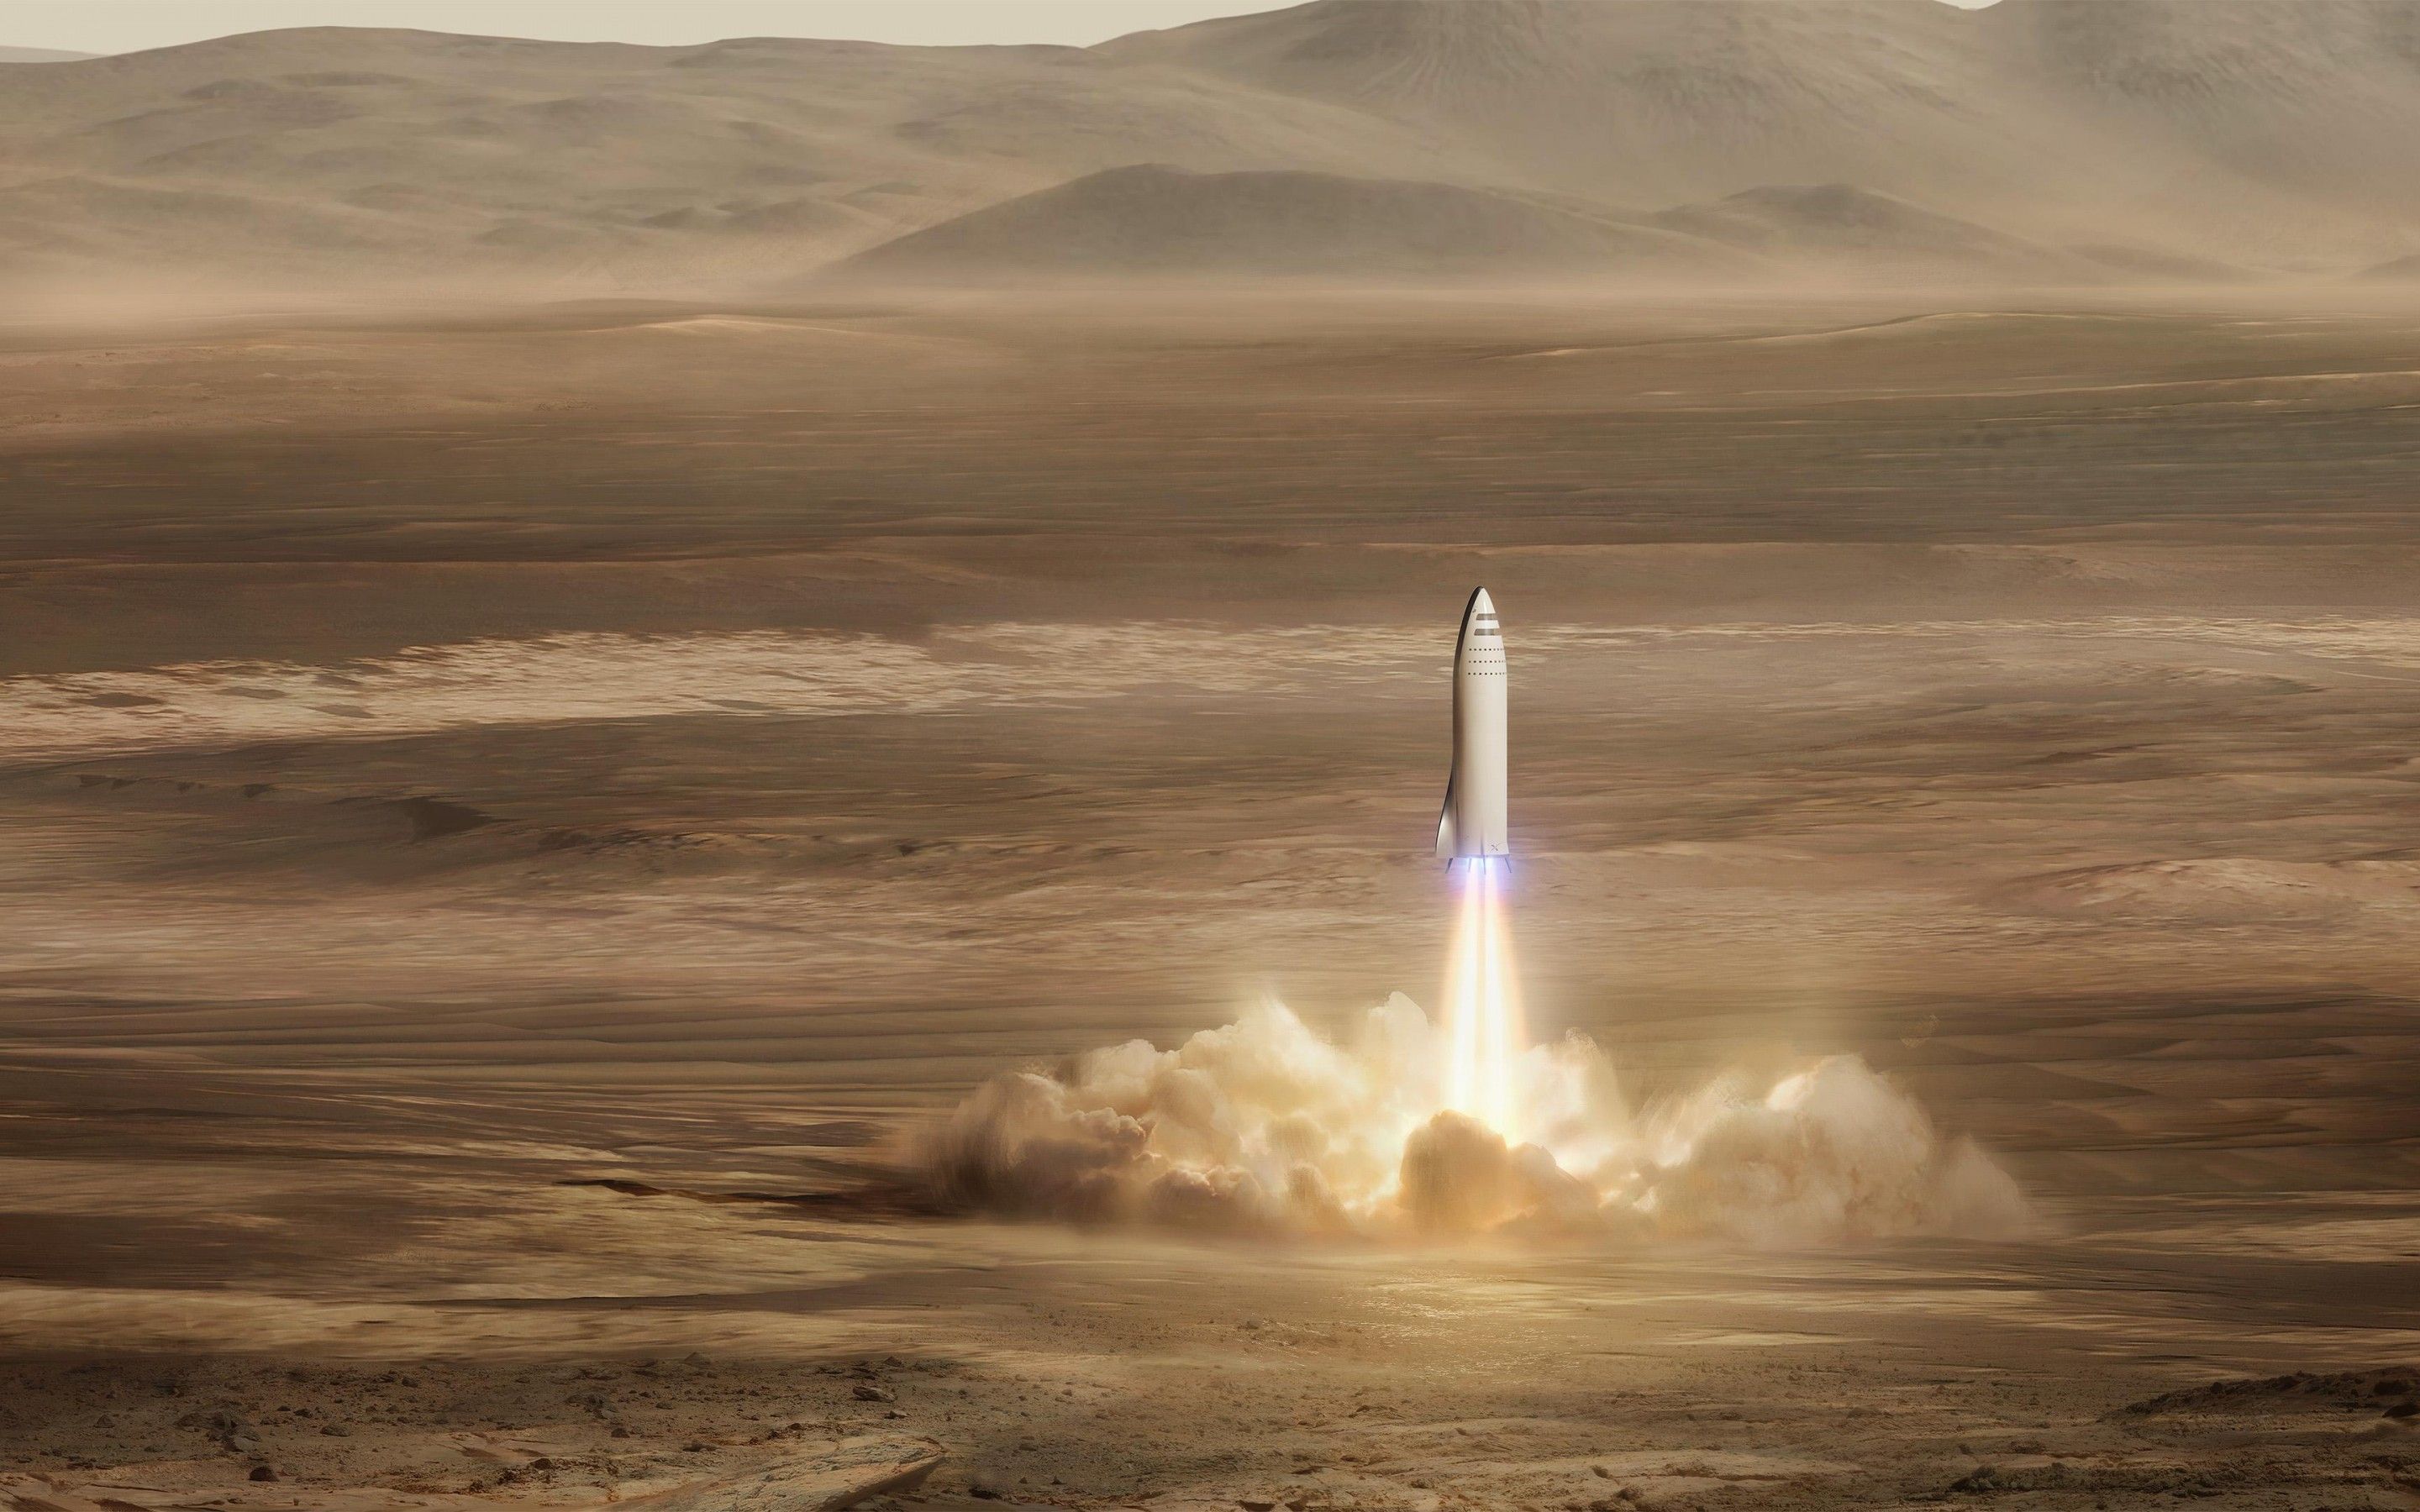 Download wallpaper SpaceX, 4k, desert, rocket launch, spacecraft